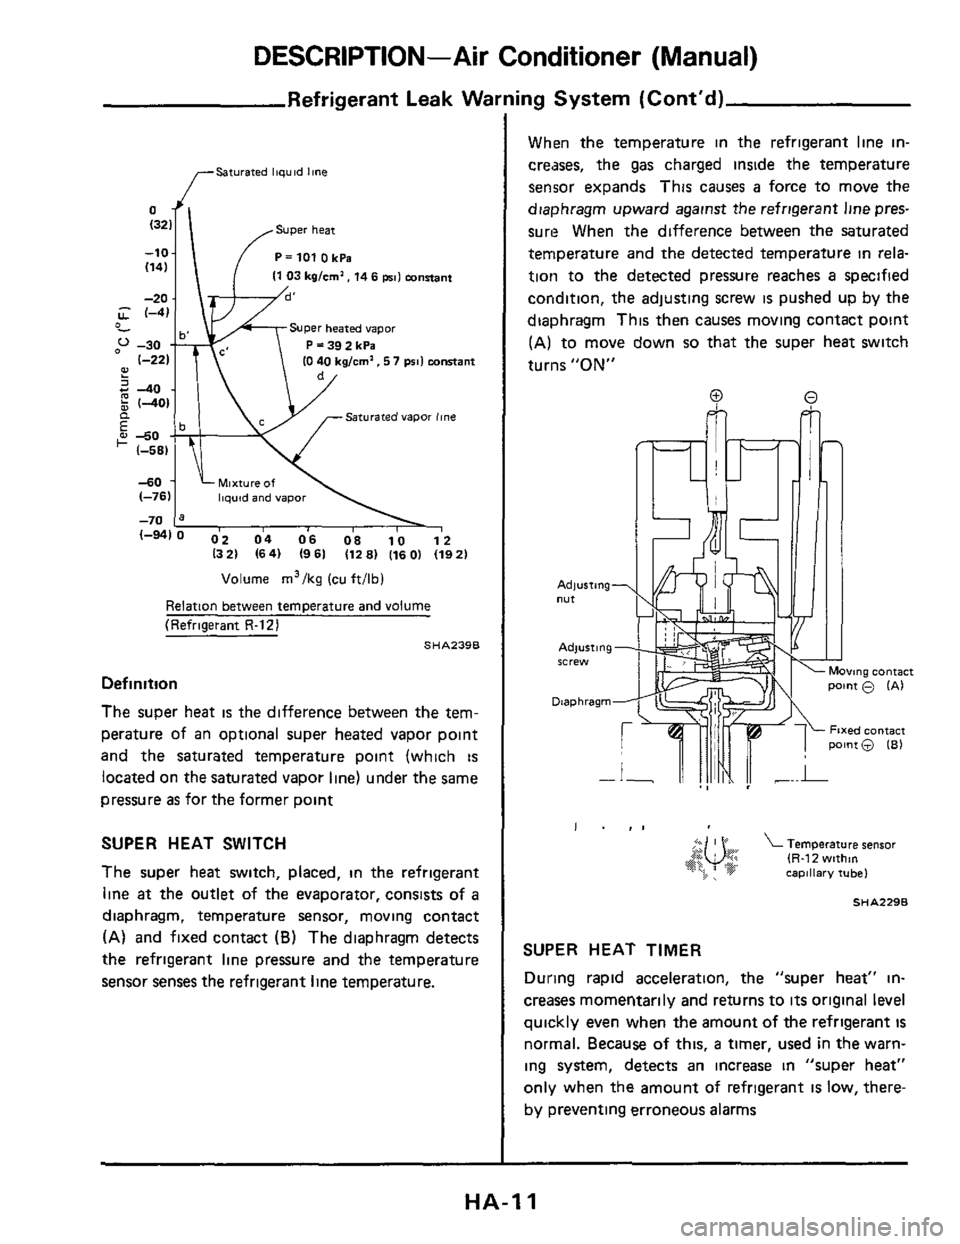 NISSAN 300ZX 1984 Z31 Heather And Air Conditioner Workshop Manual DESCRIPTION-Air Conditioner (Manual) 
Refrigerant  Leak Wai 
,---Saturated liquid line 
Super  heat 
-10  P=1010kPa 
I1 03 kg/cm2, 14 6 si1 mnsant (141 
U 4- Super heated vapor 
P = 39 2 kPa 10 40 kgl